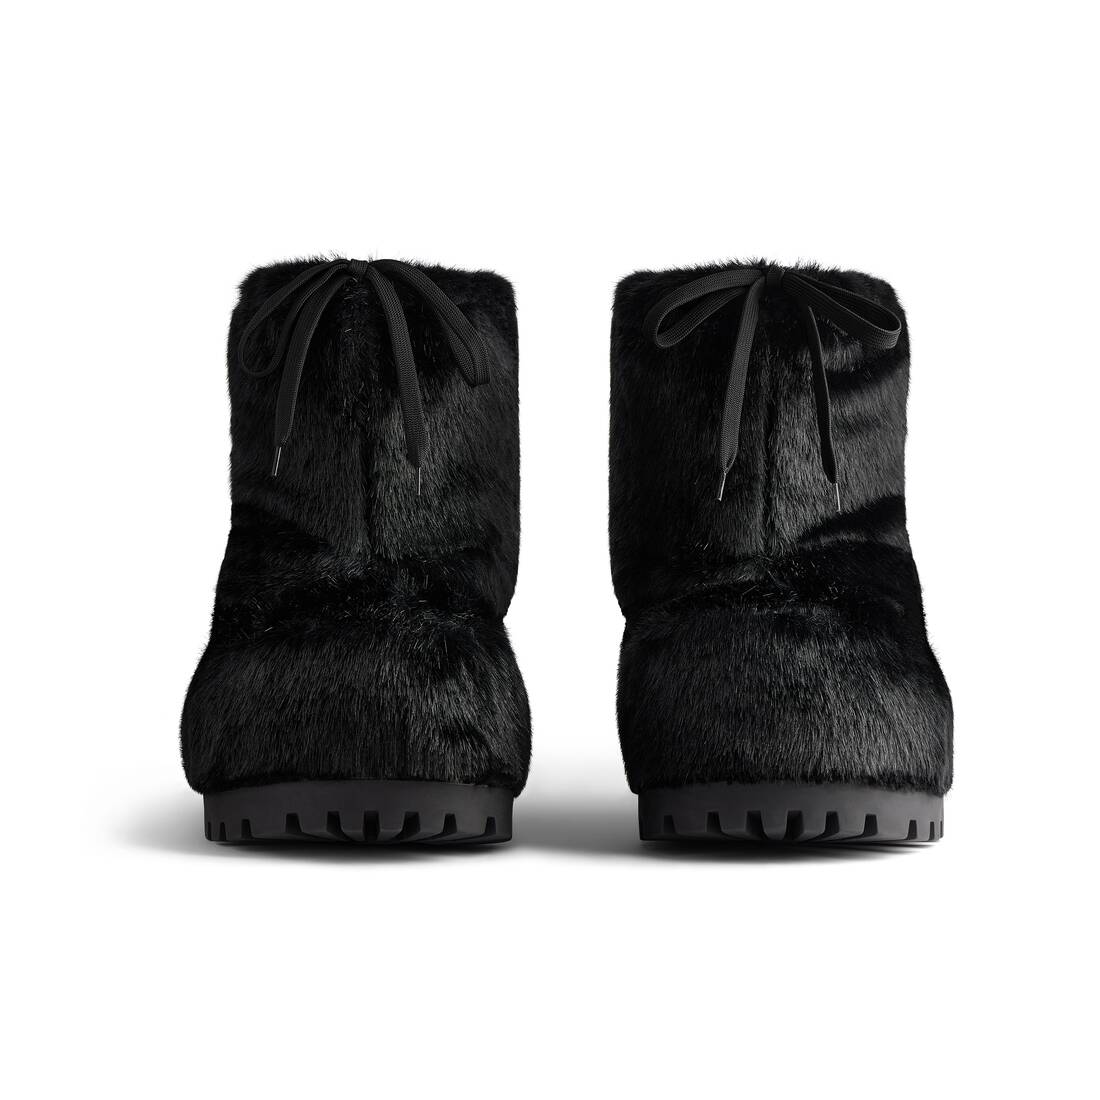 Women's Alaska Low Boot in Black